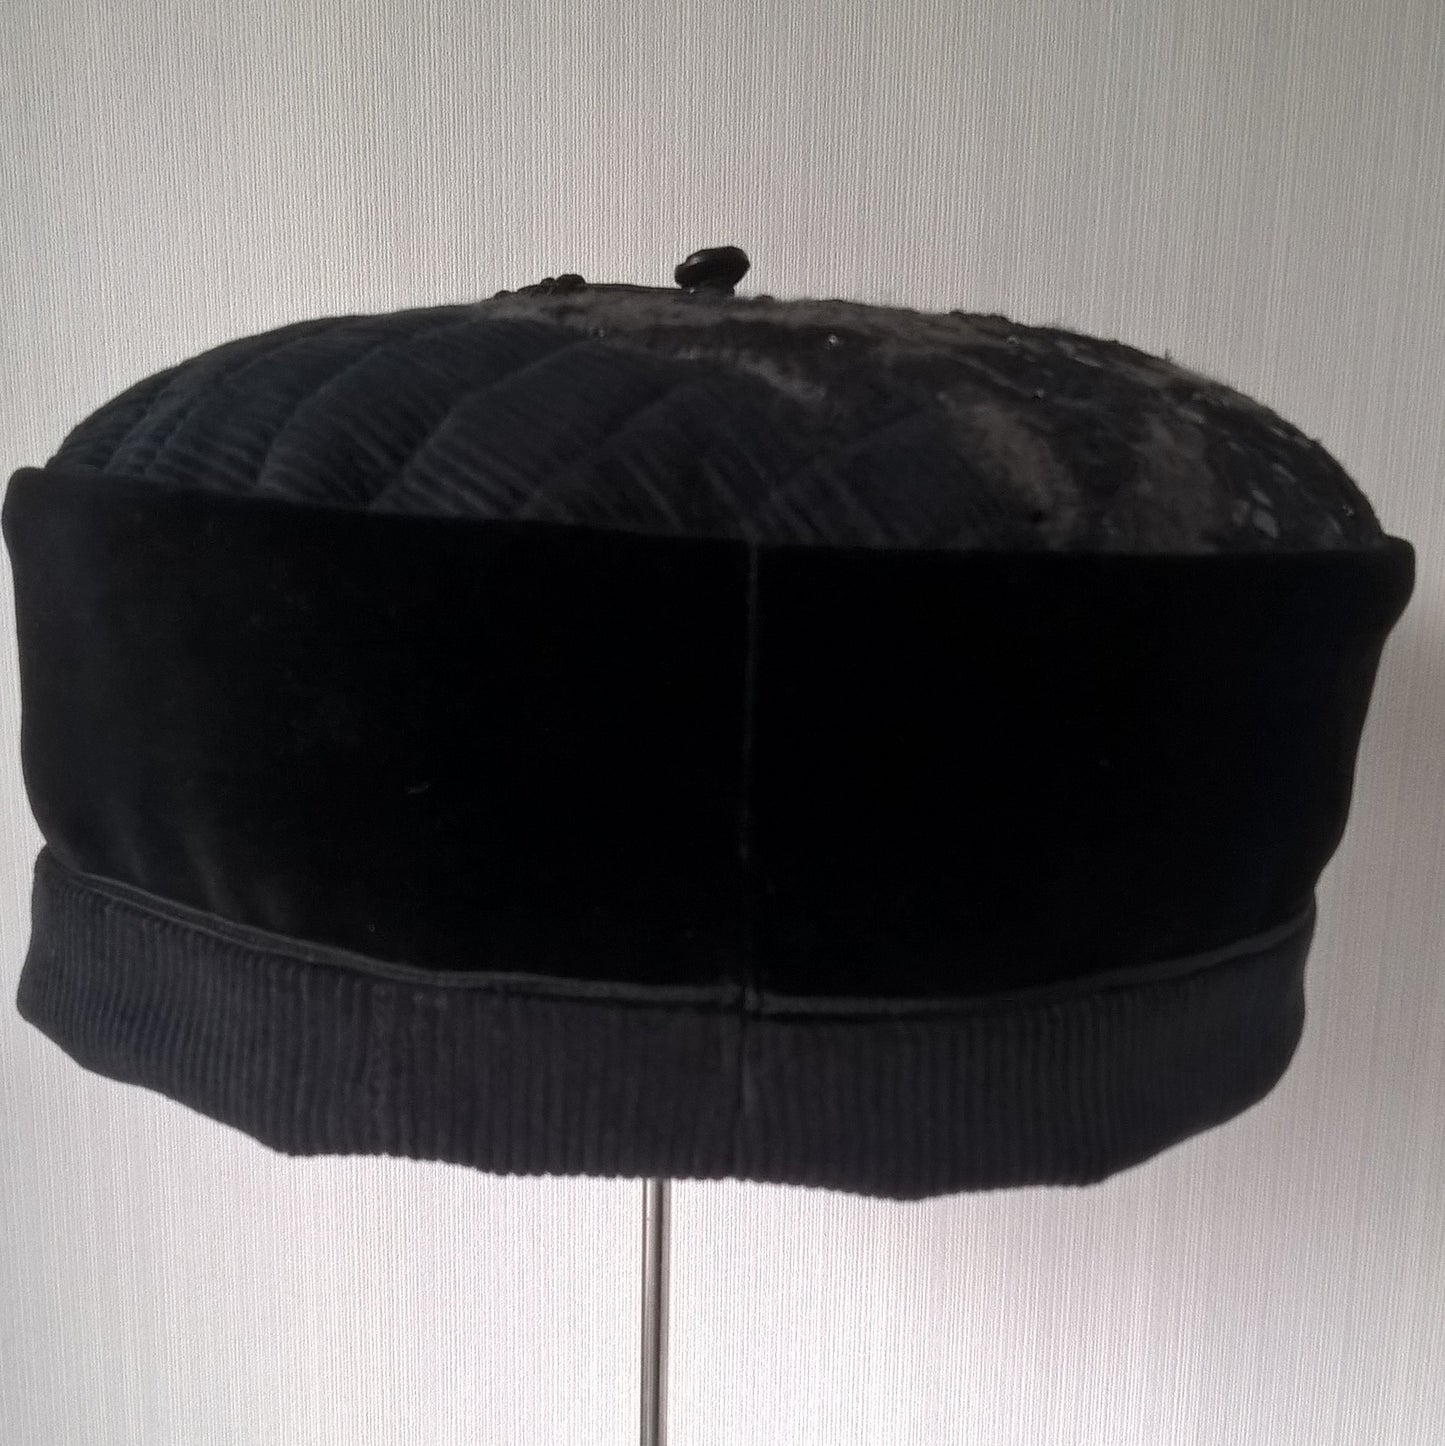 Velvet and corduroy pillbox hat back view